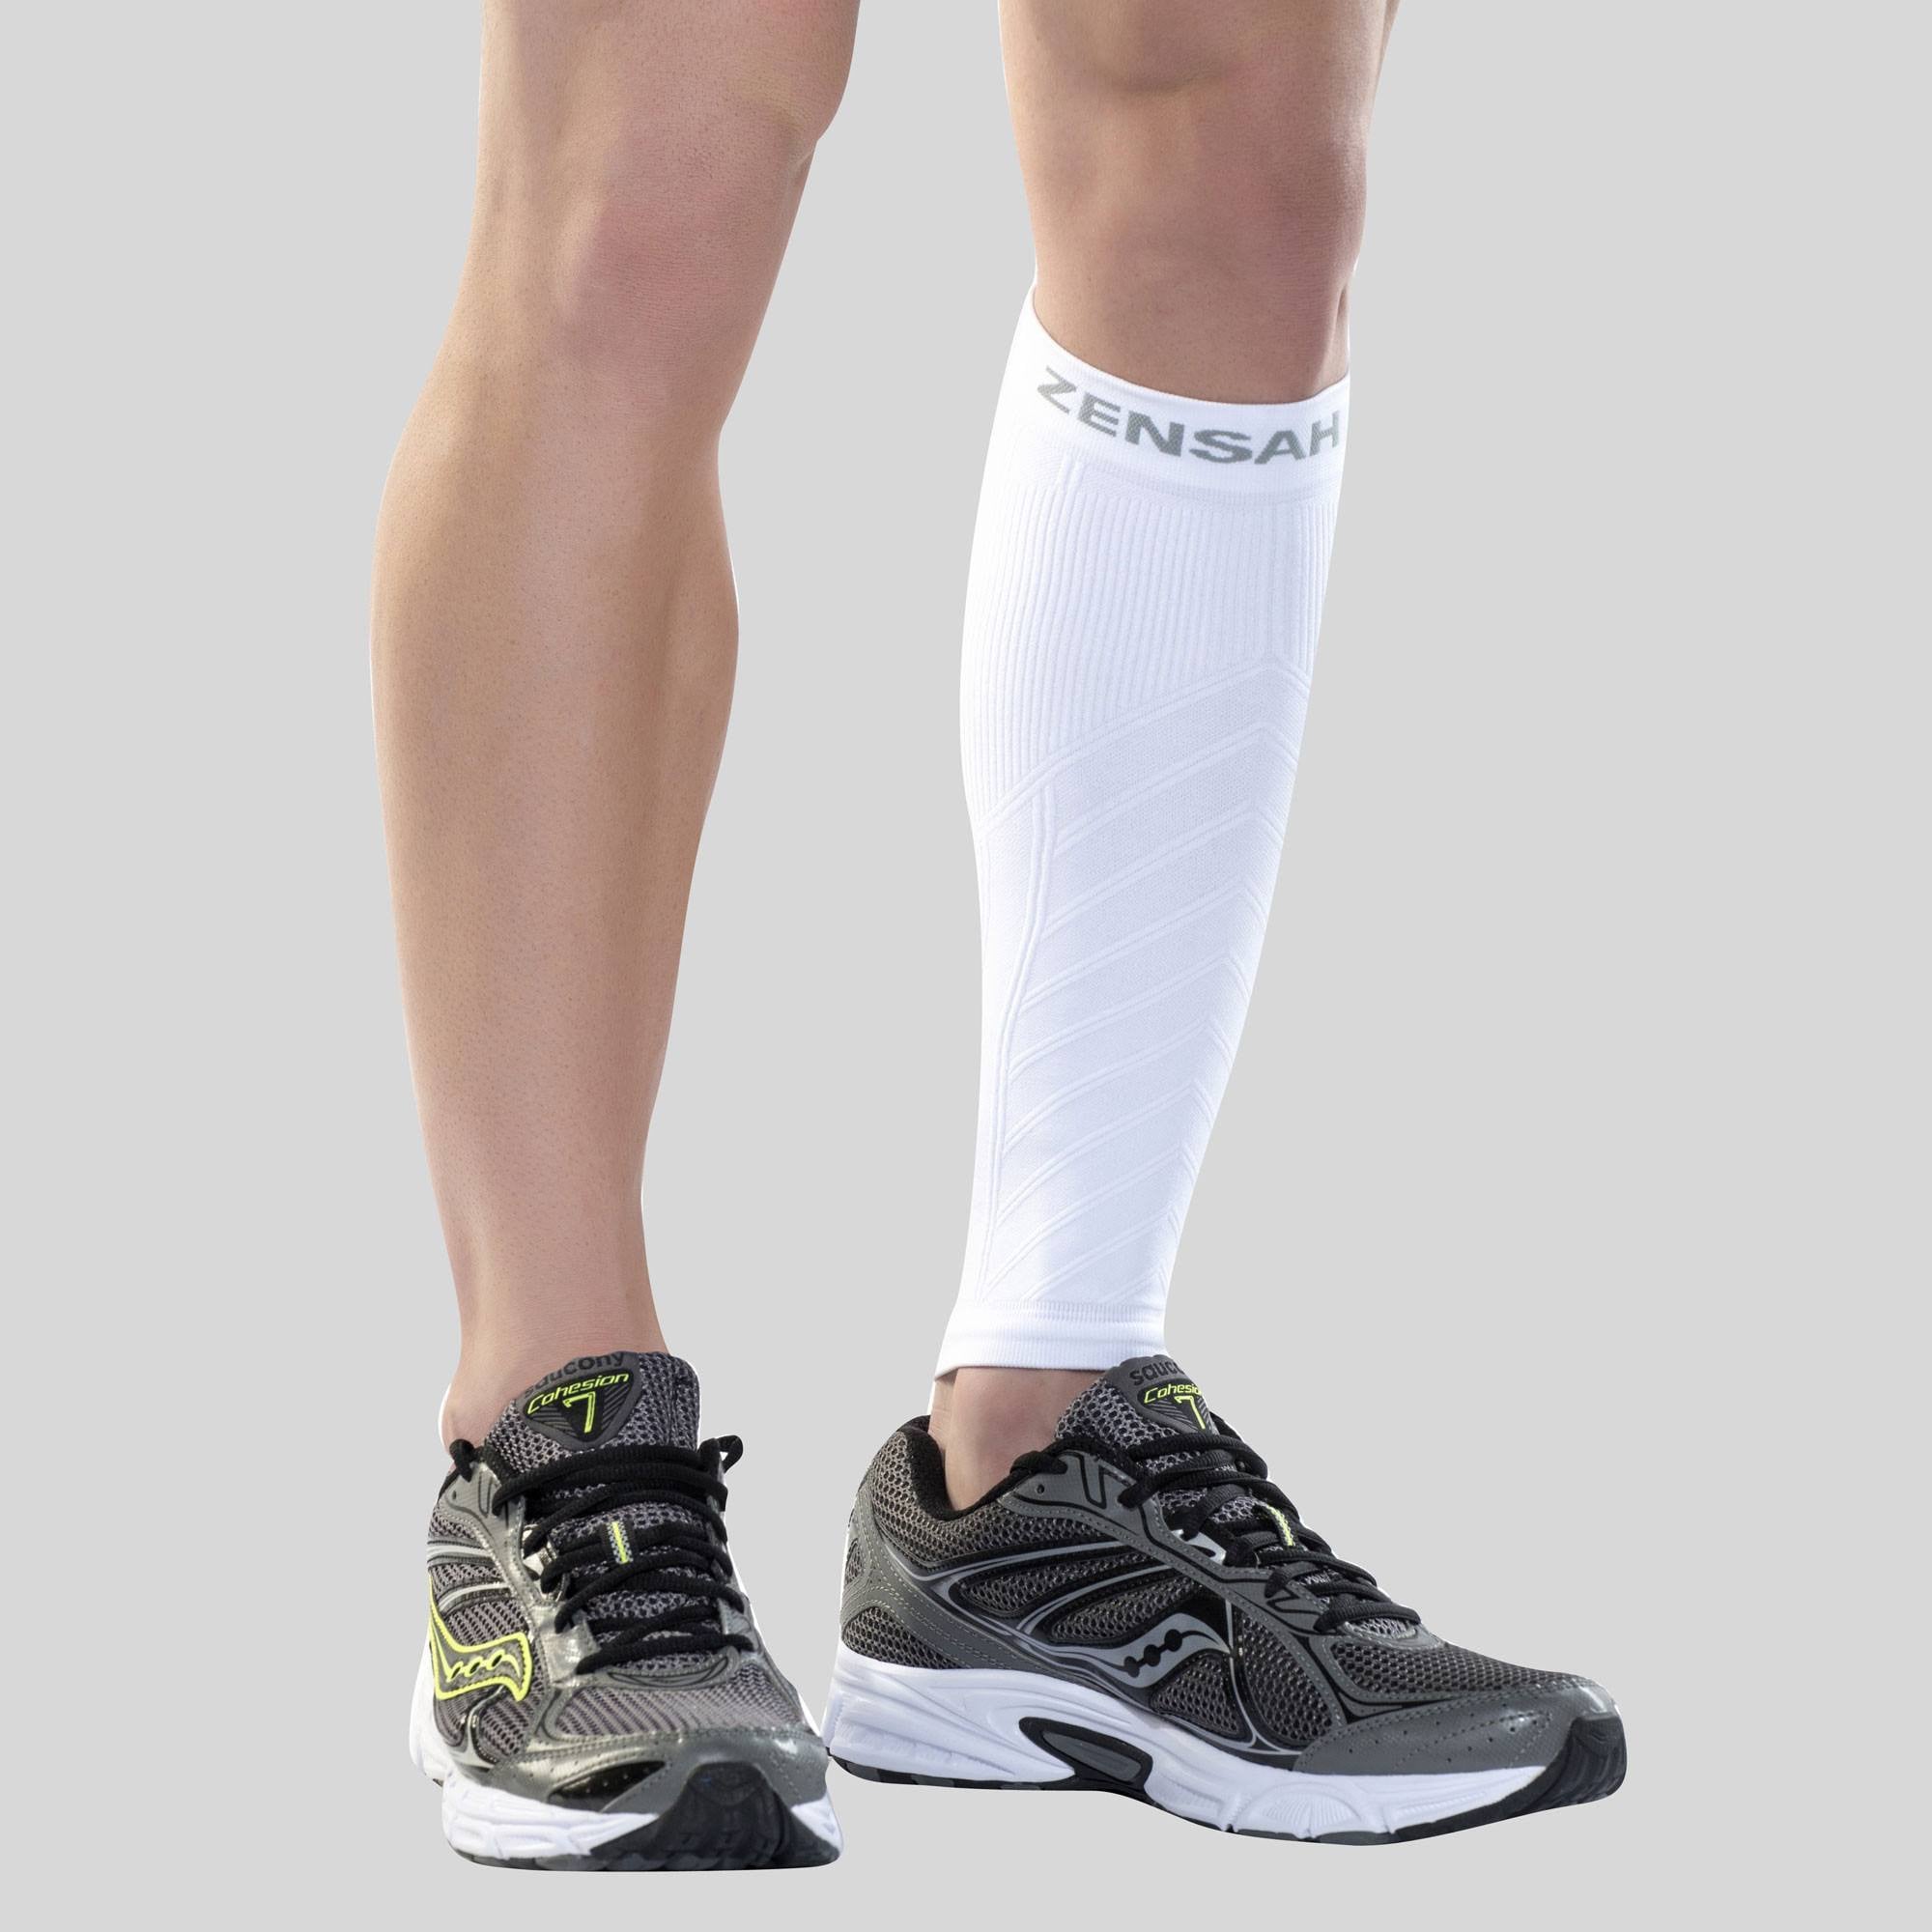 Mymisisa Leg Calf Shin Splints Support Running Athletics Compression  Sleeves (Blue) 